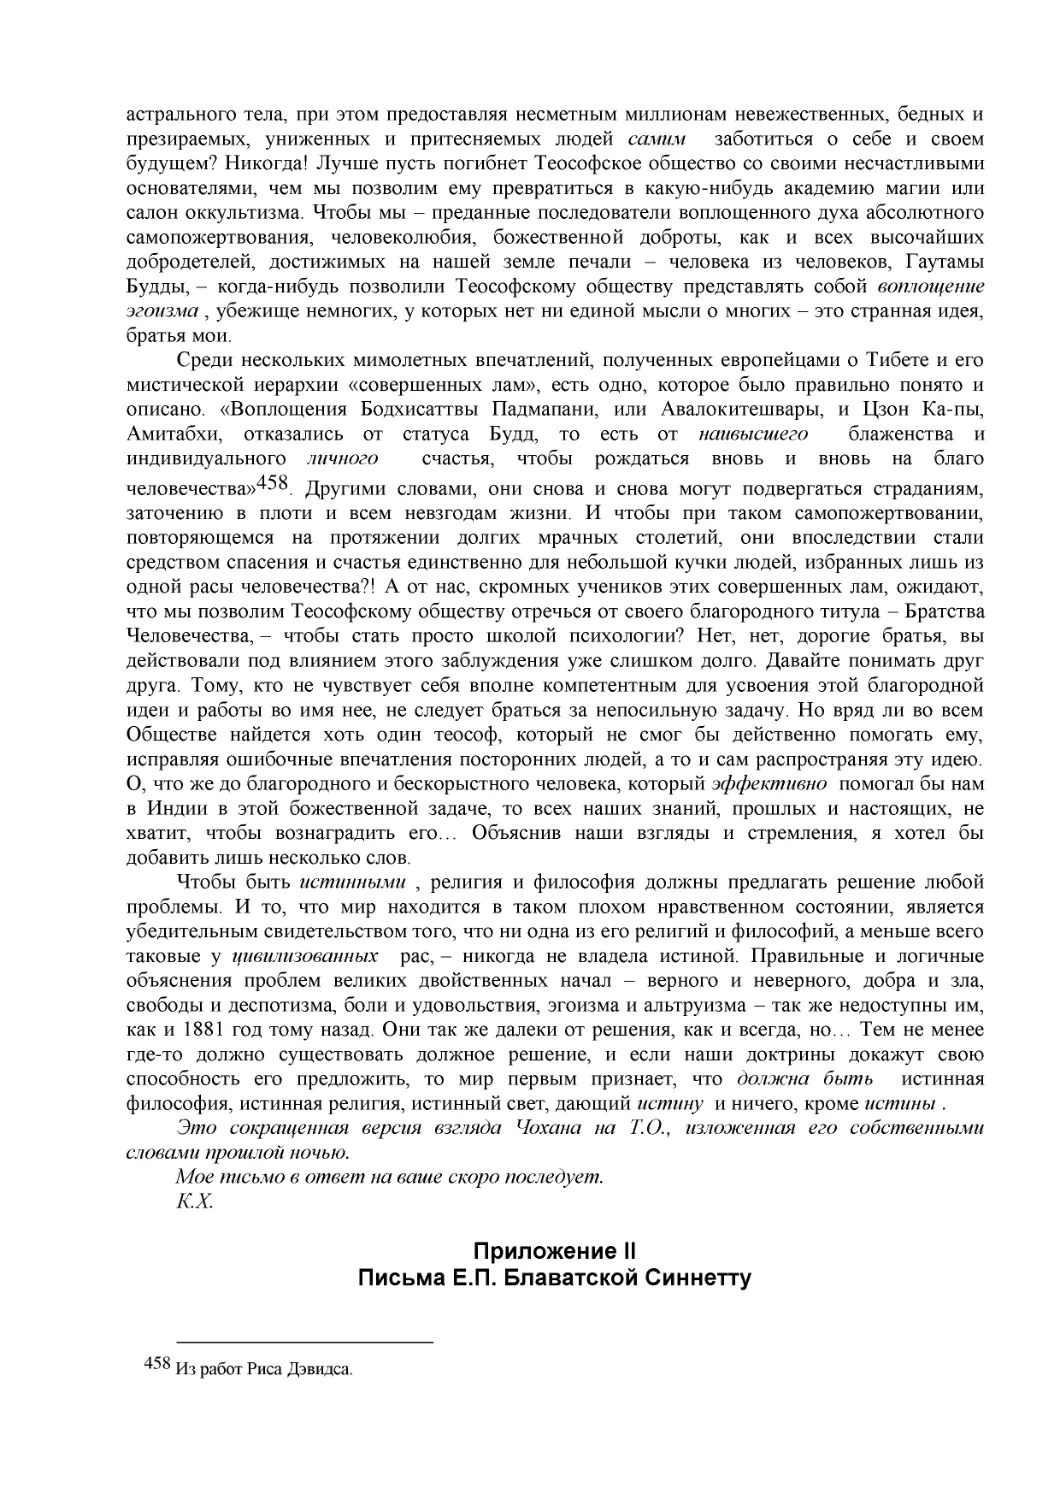 Приложениe II
Письма Е.П. Блаватской Синнетту